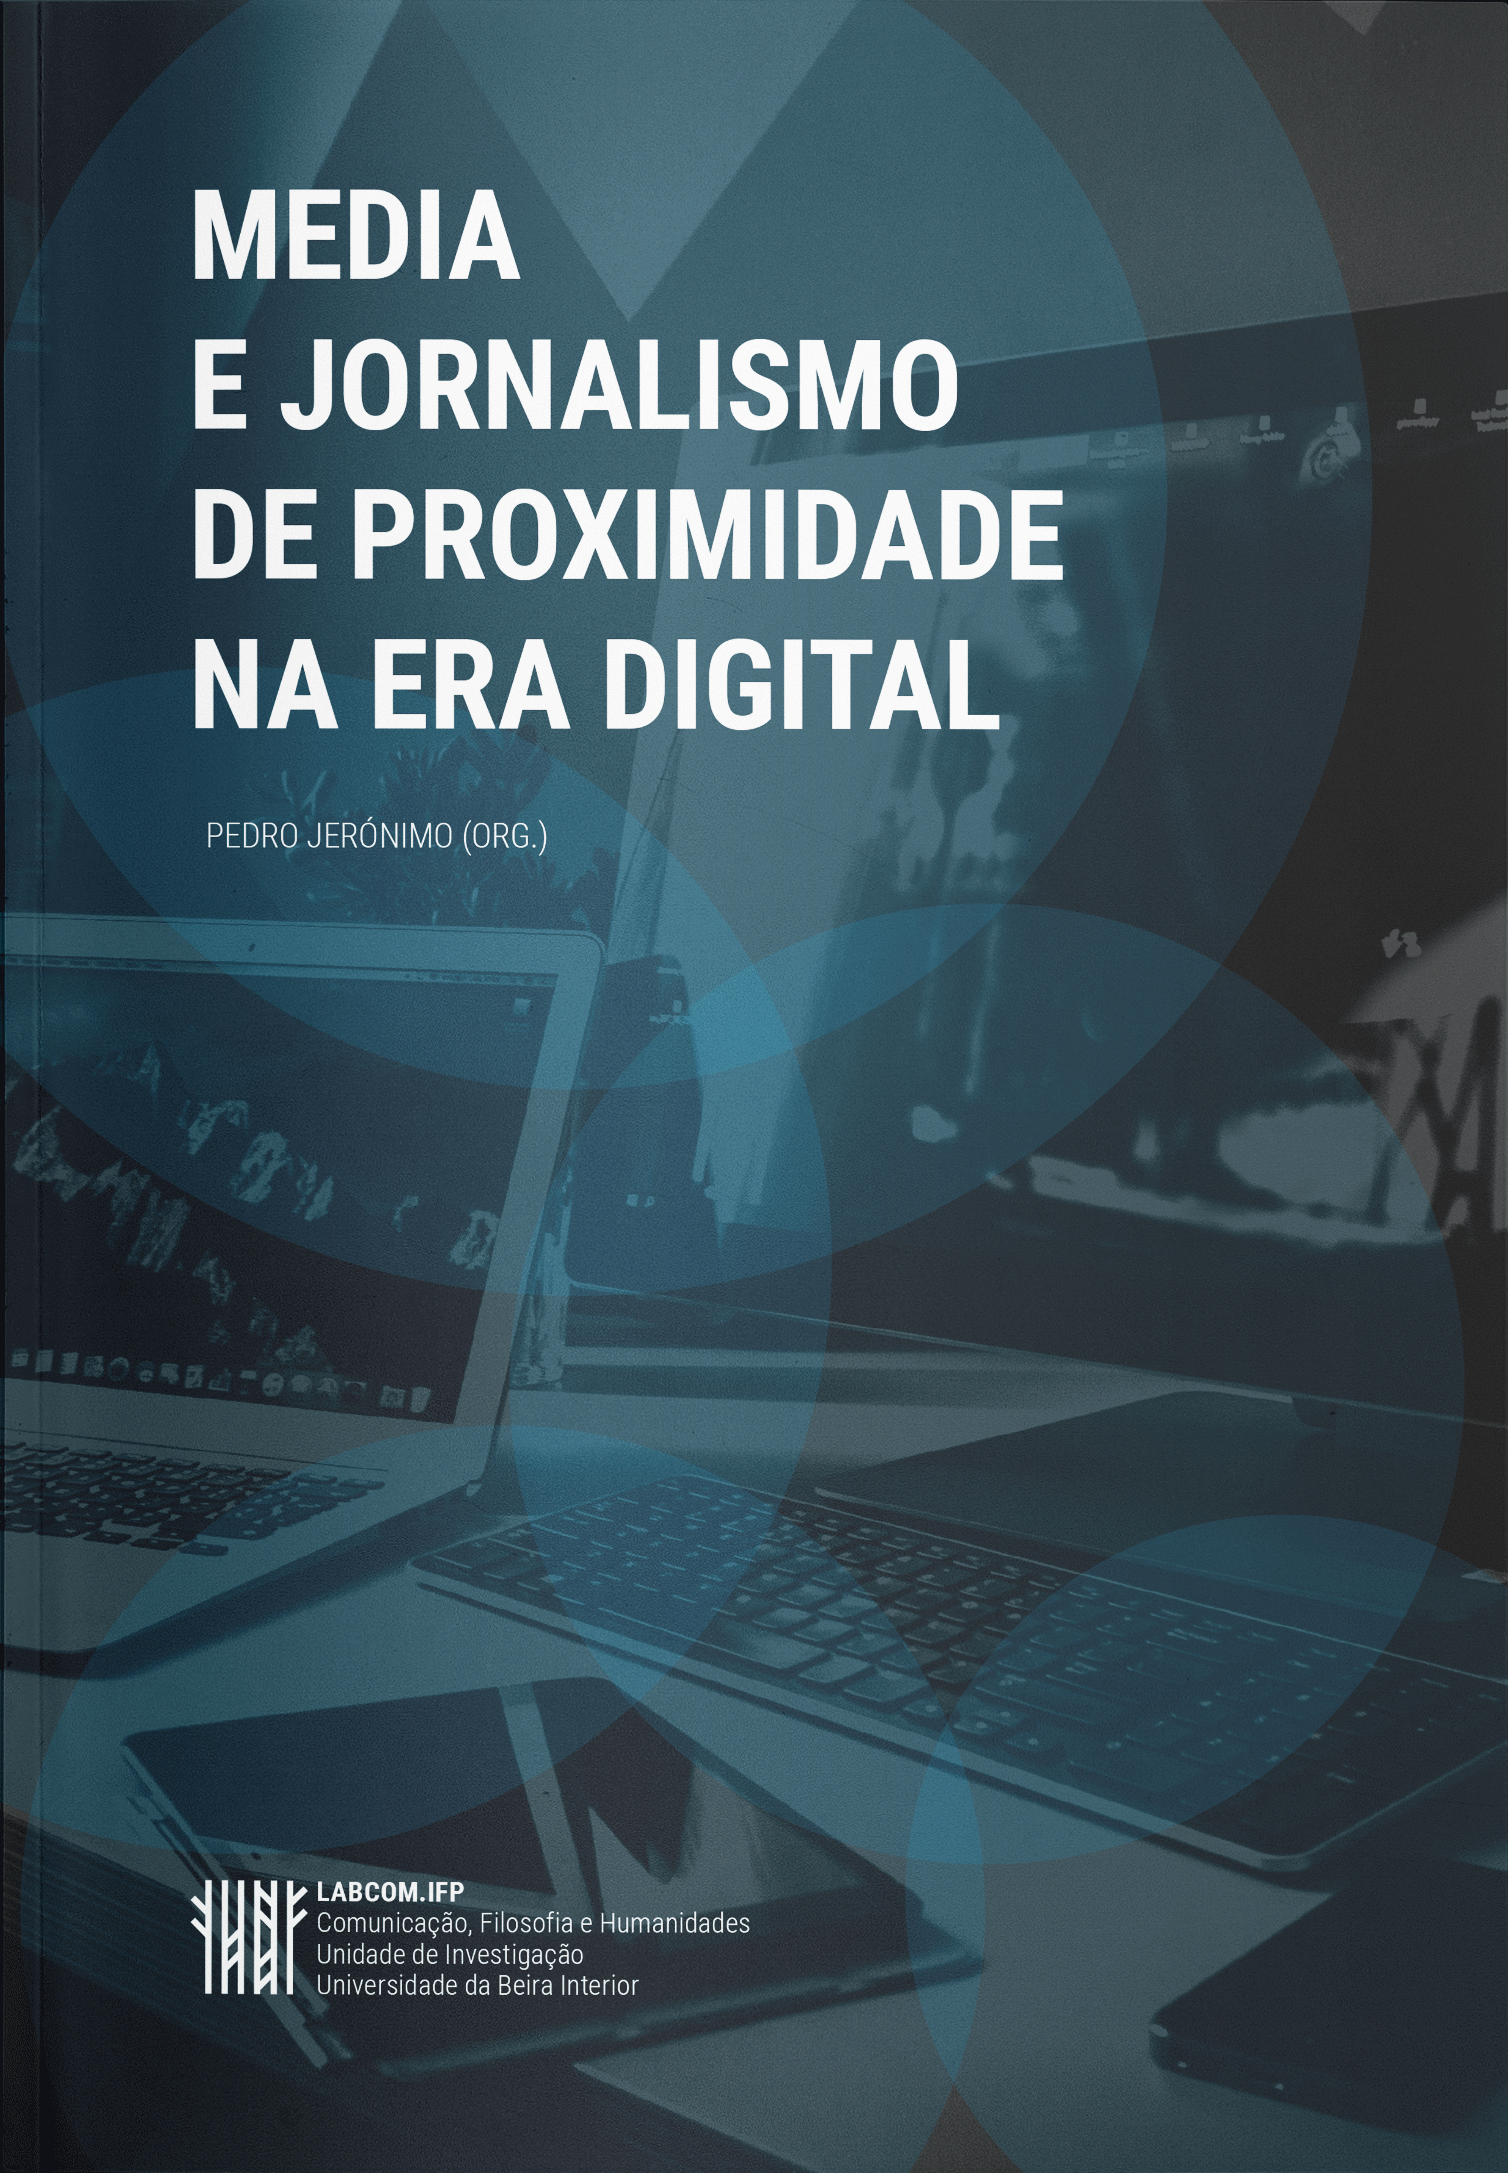 Capa: Pedro Jerónimo (2017) Media e jornalismo de proximidade na era digital. Communication  +  Philosophy  +  Humanities. .